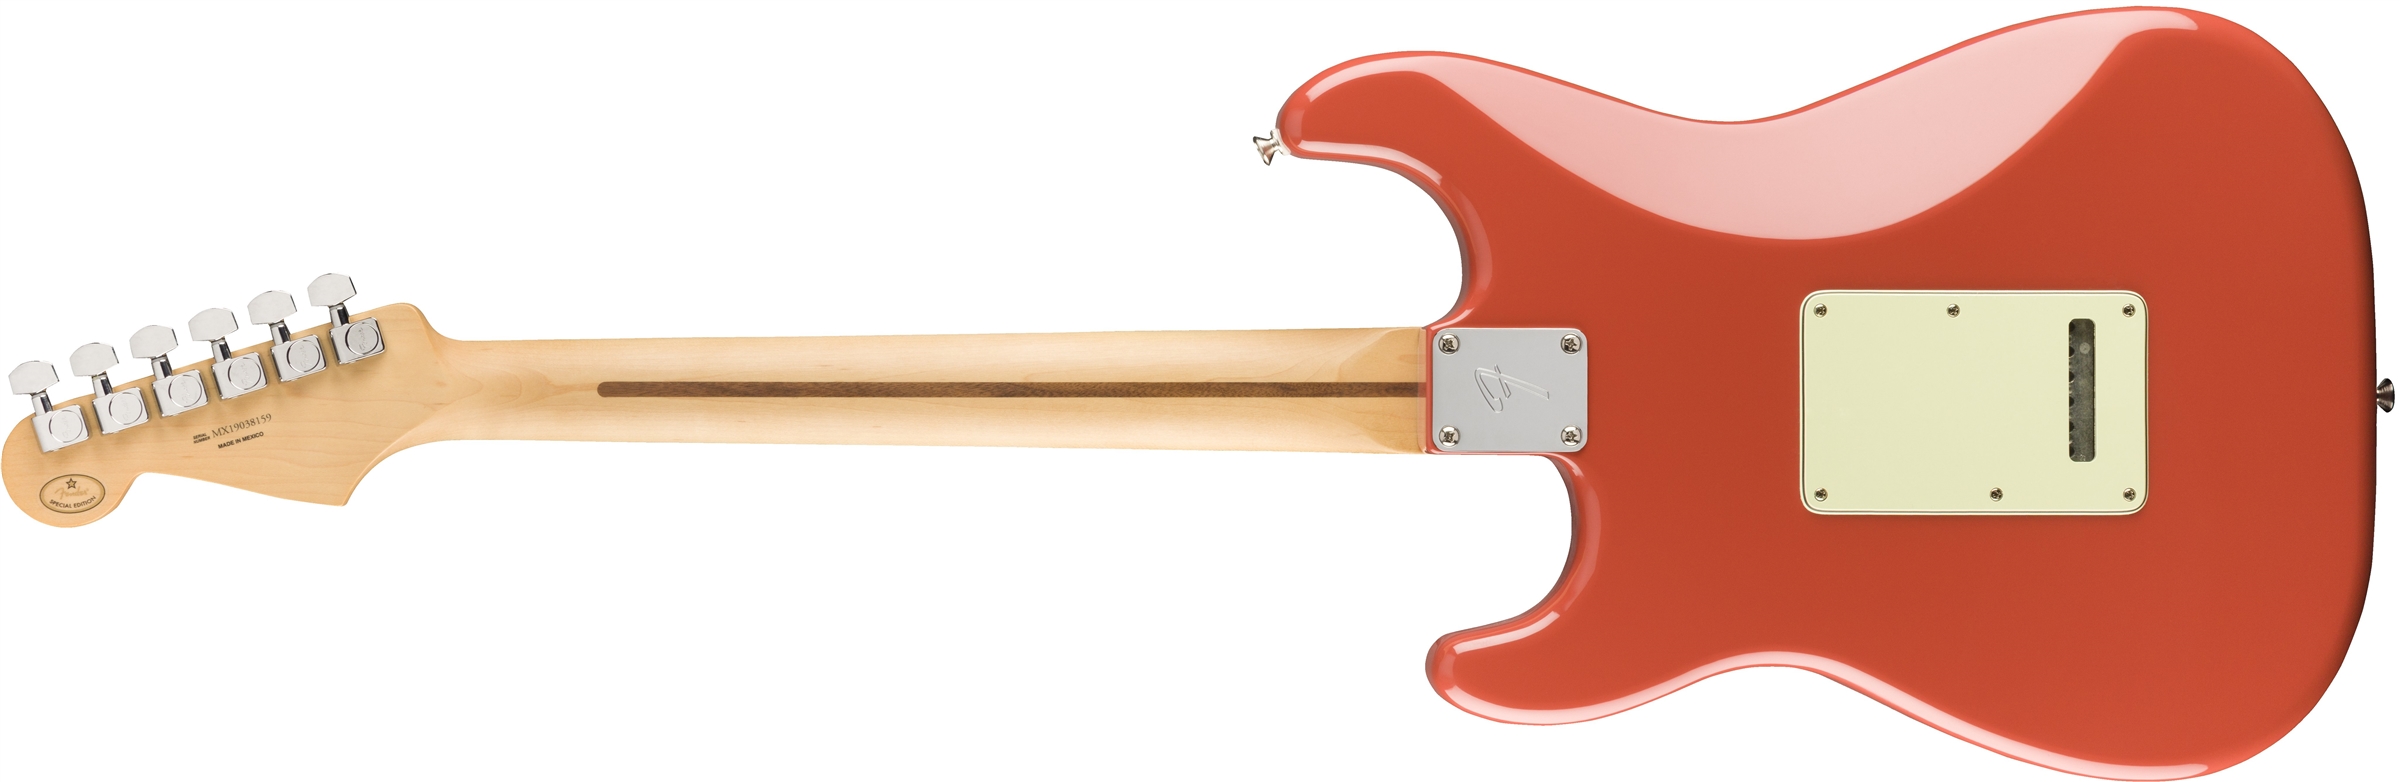 Fender Strat Player Ltd Mex 3s Trem Pf - Fiesta Red - Str shape electric guitar - Variation 1